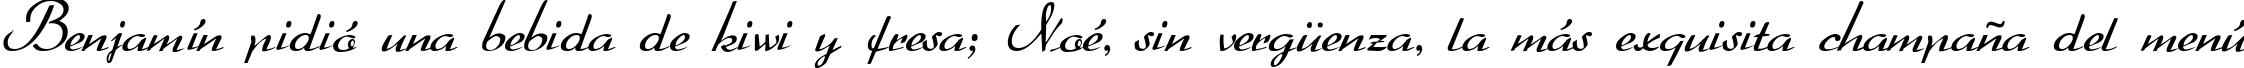 Пример написания шрифтом Arabella текста на испанском